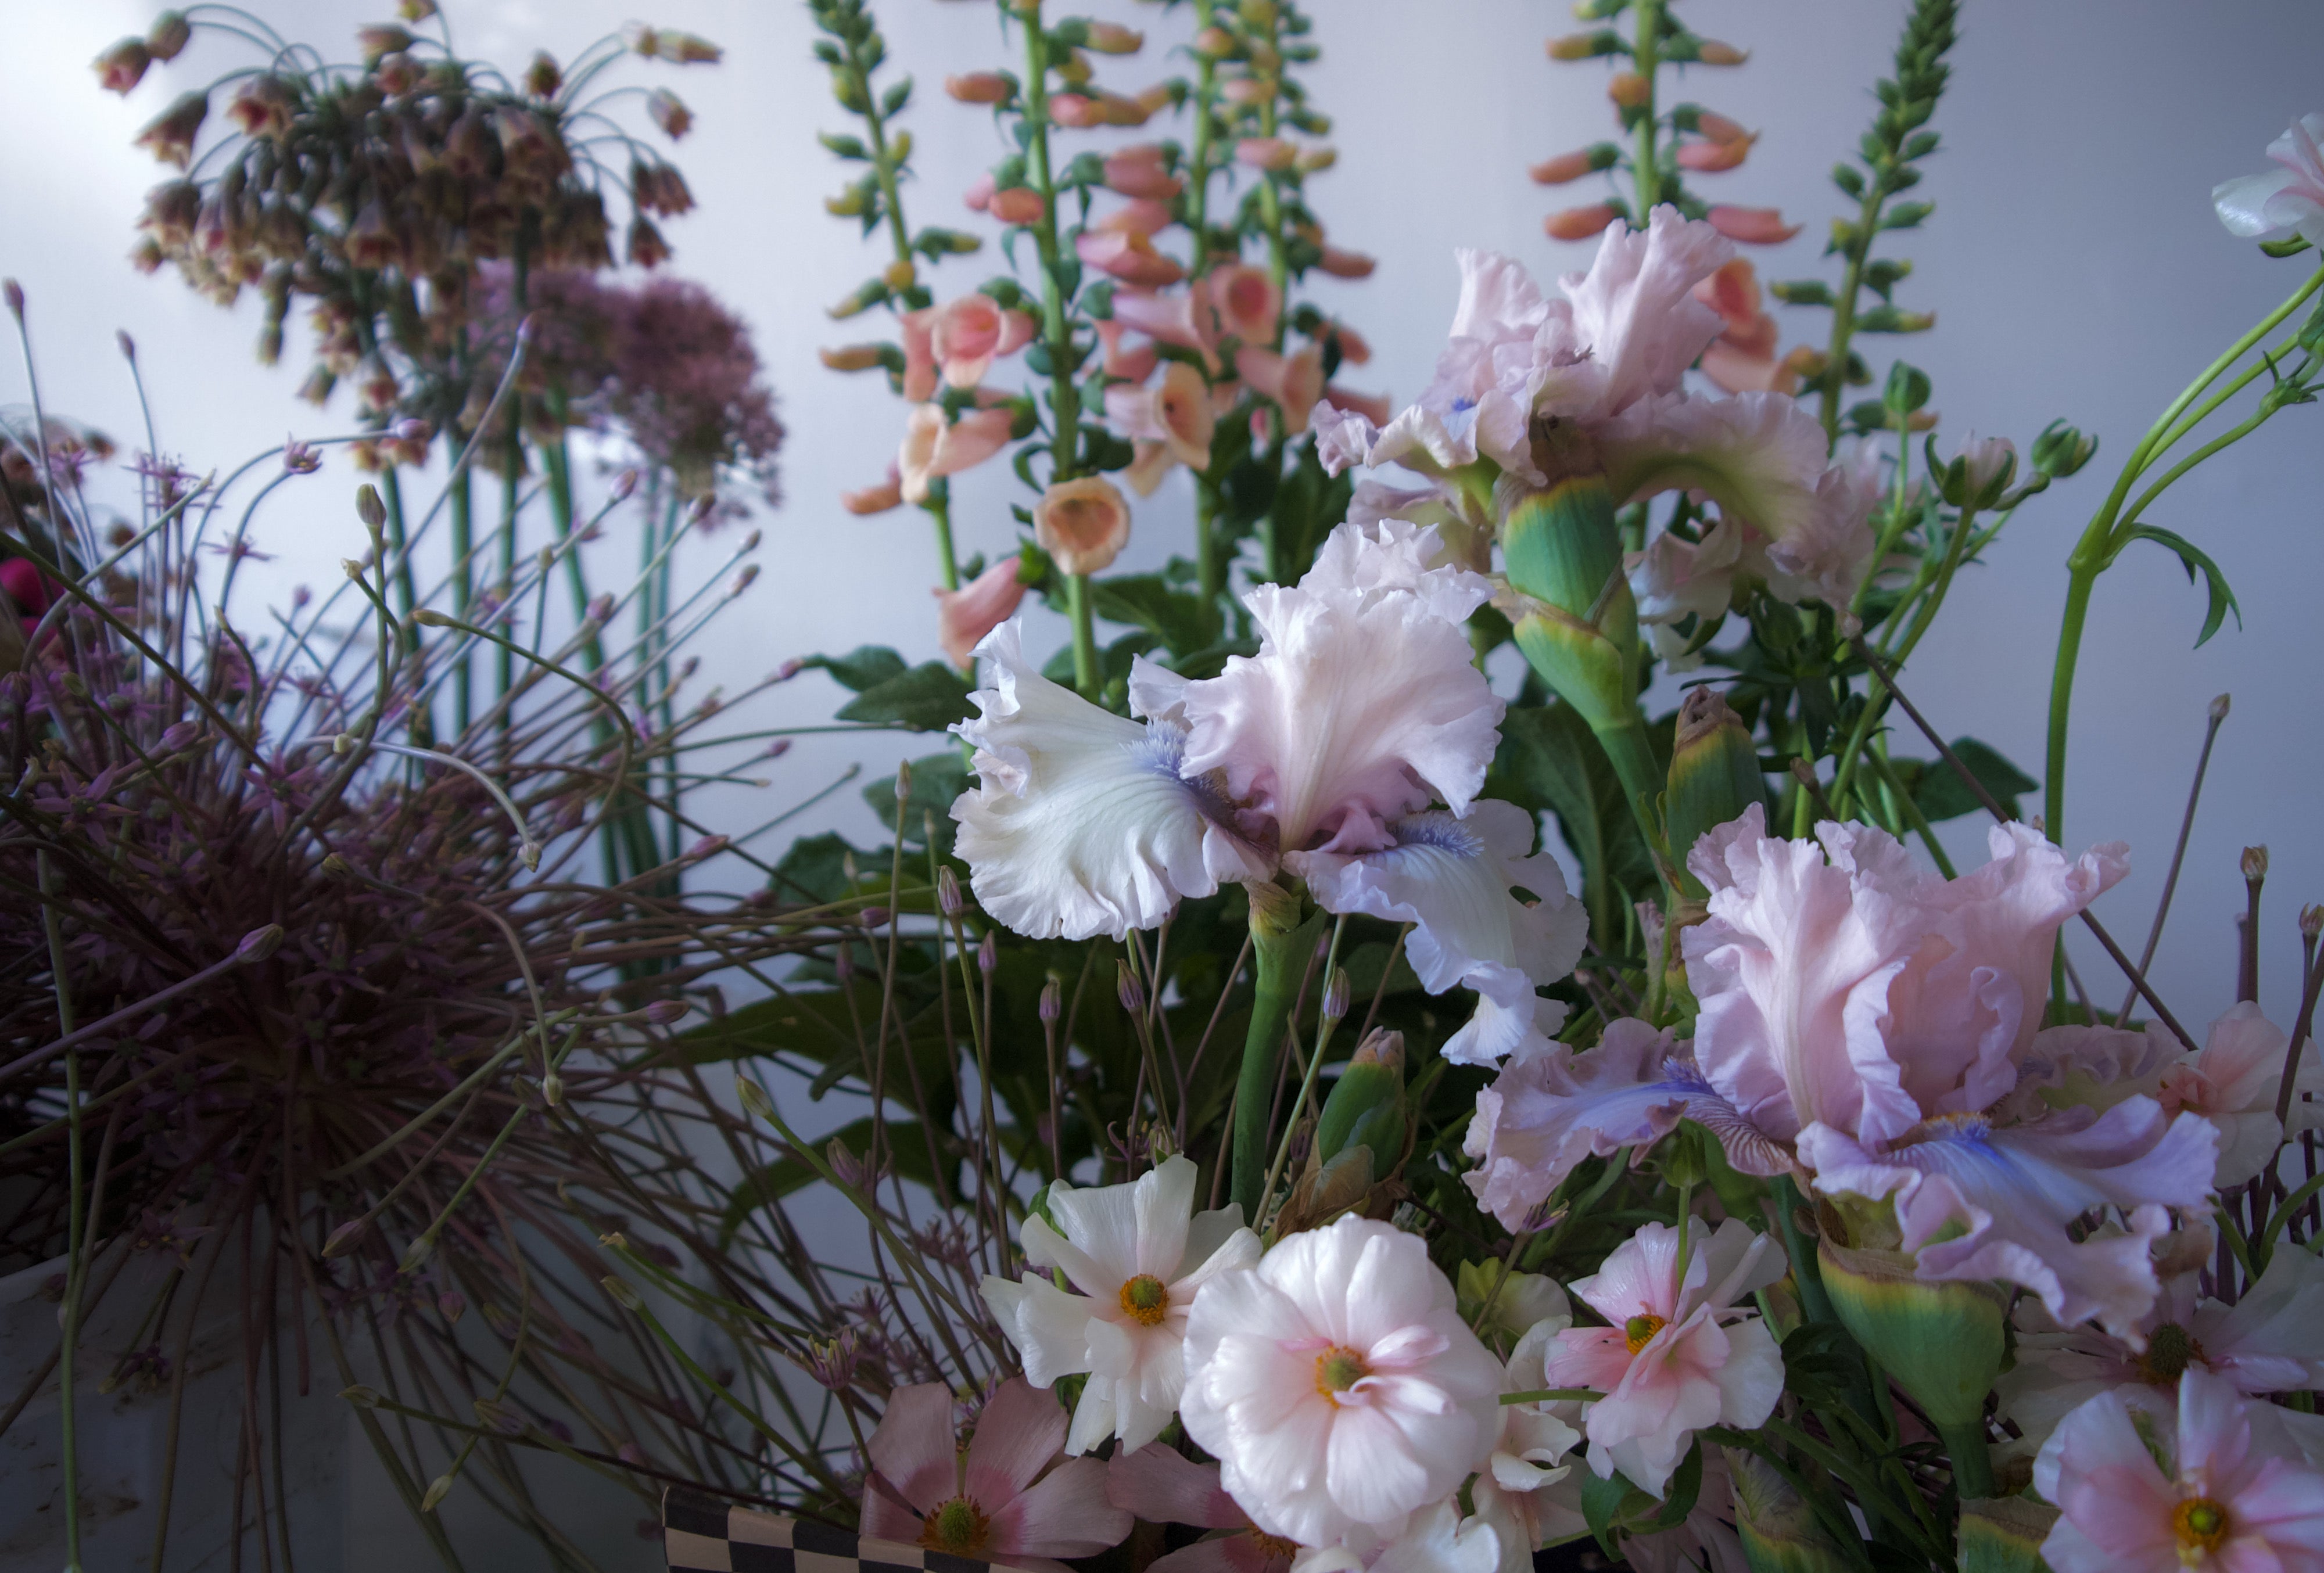 flower shop vancouver, washington | send flowers | fieldwork flowers